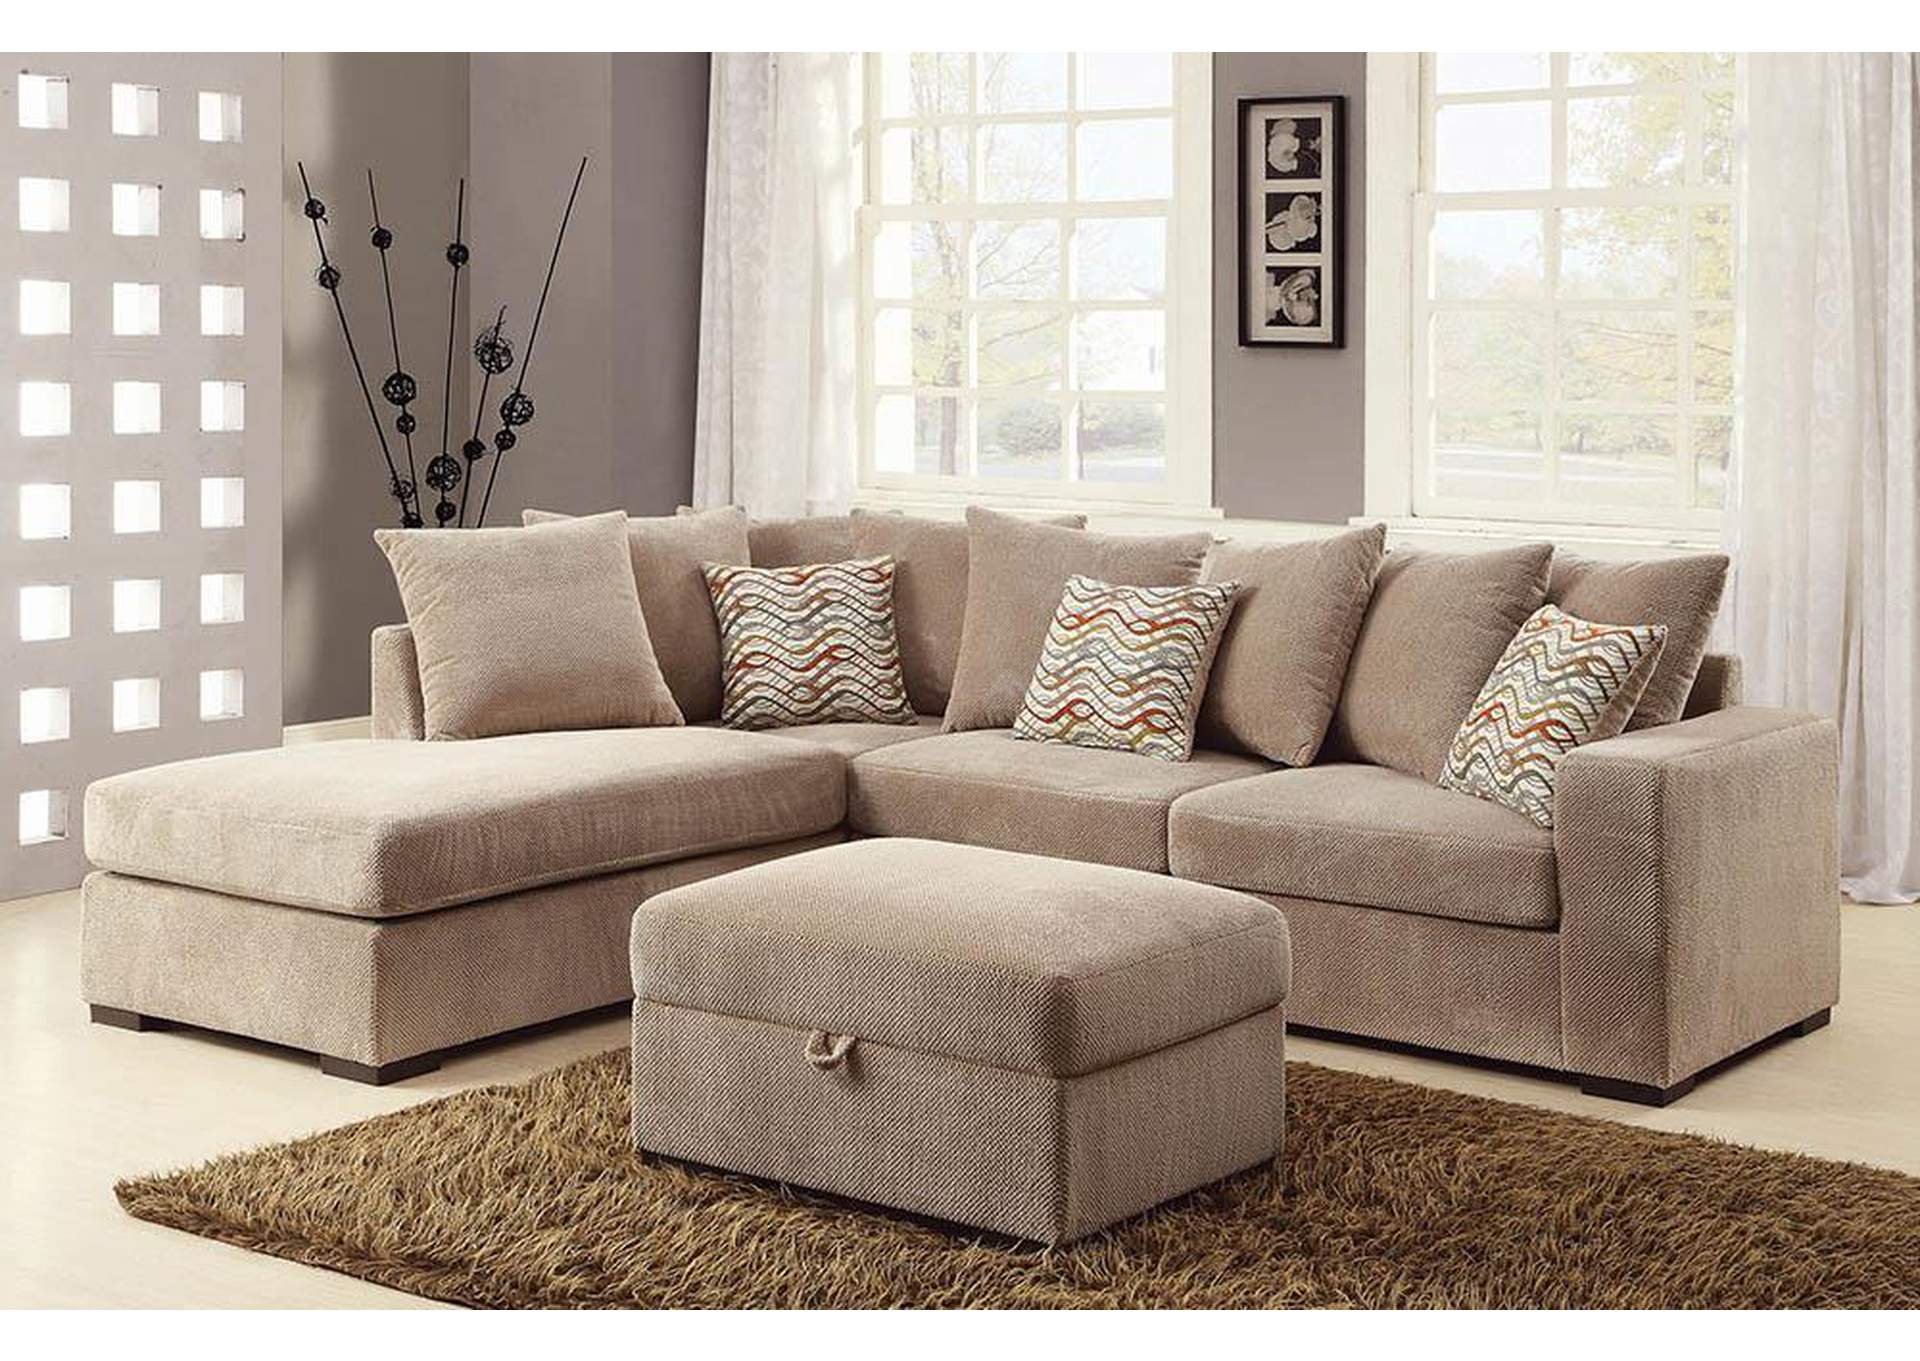 Brown Ottoman,ABF Coaster Furniture